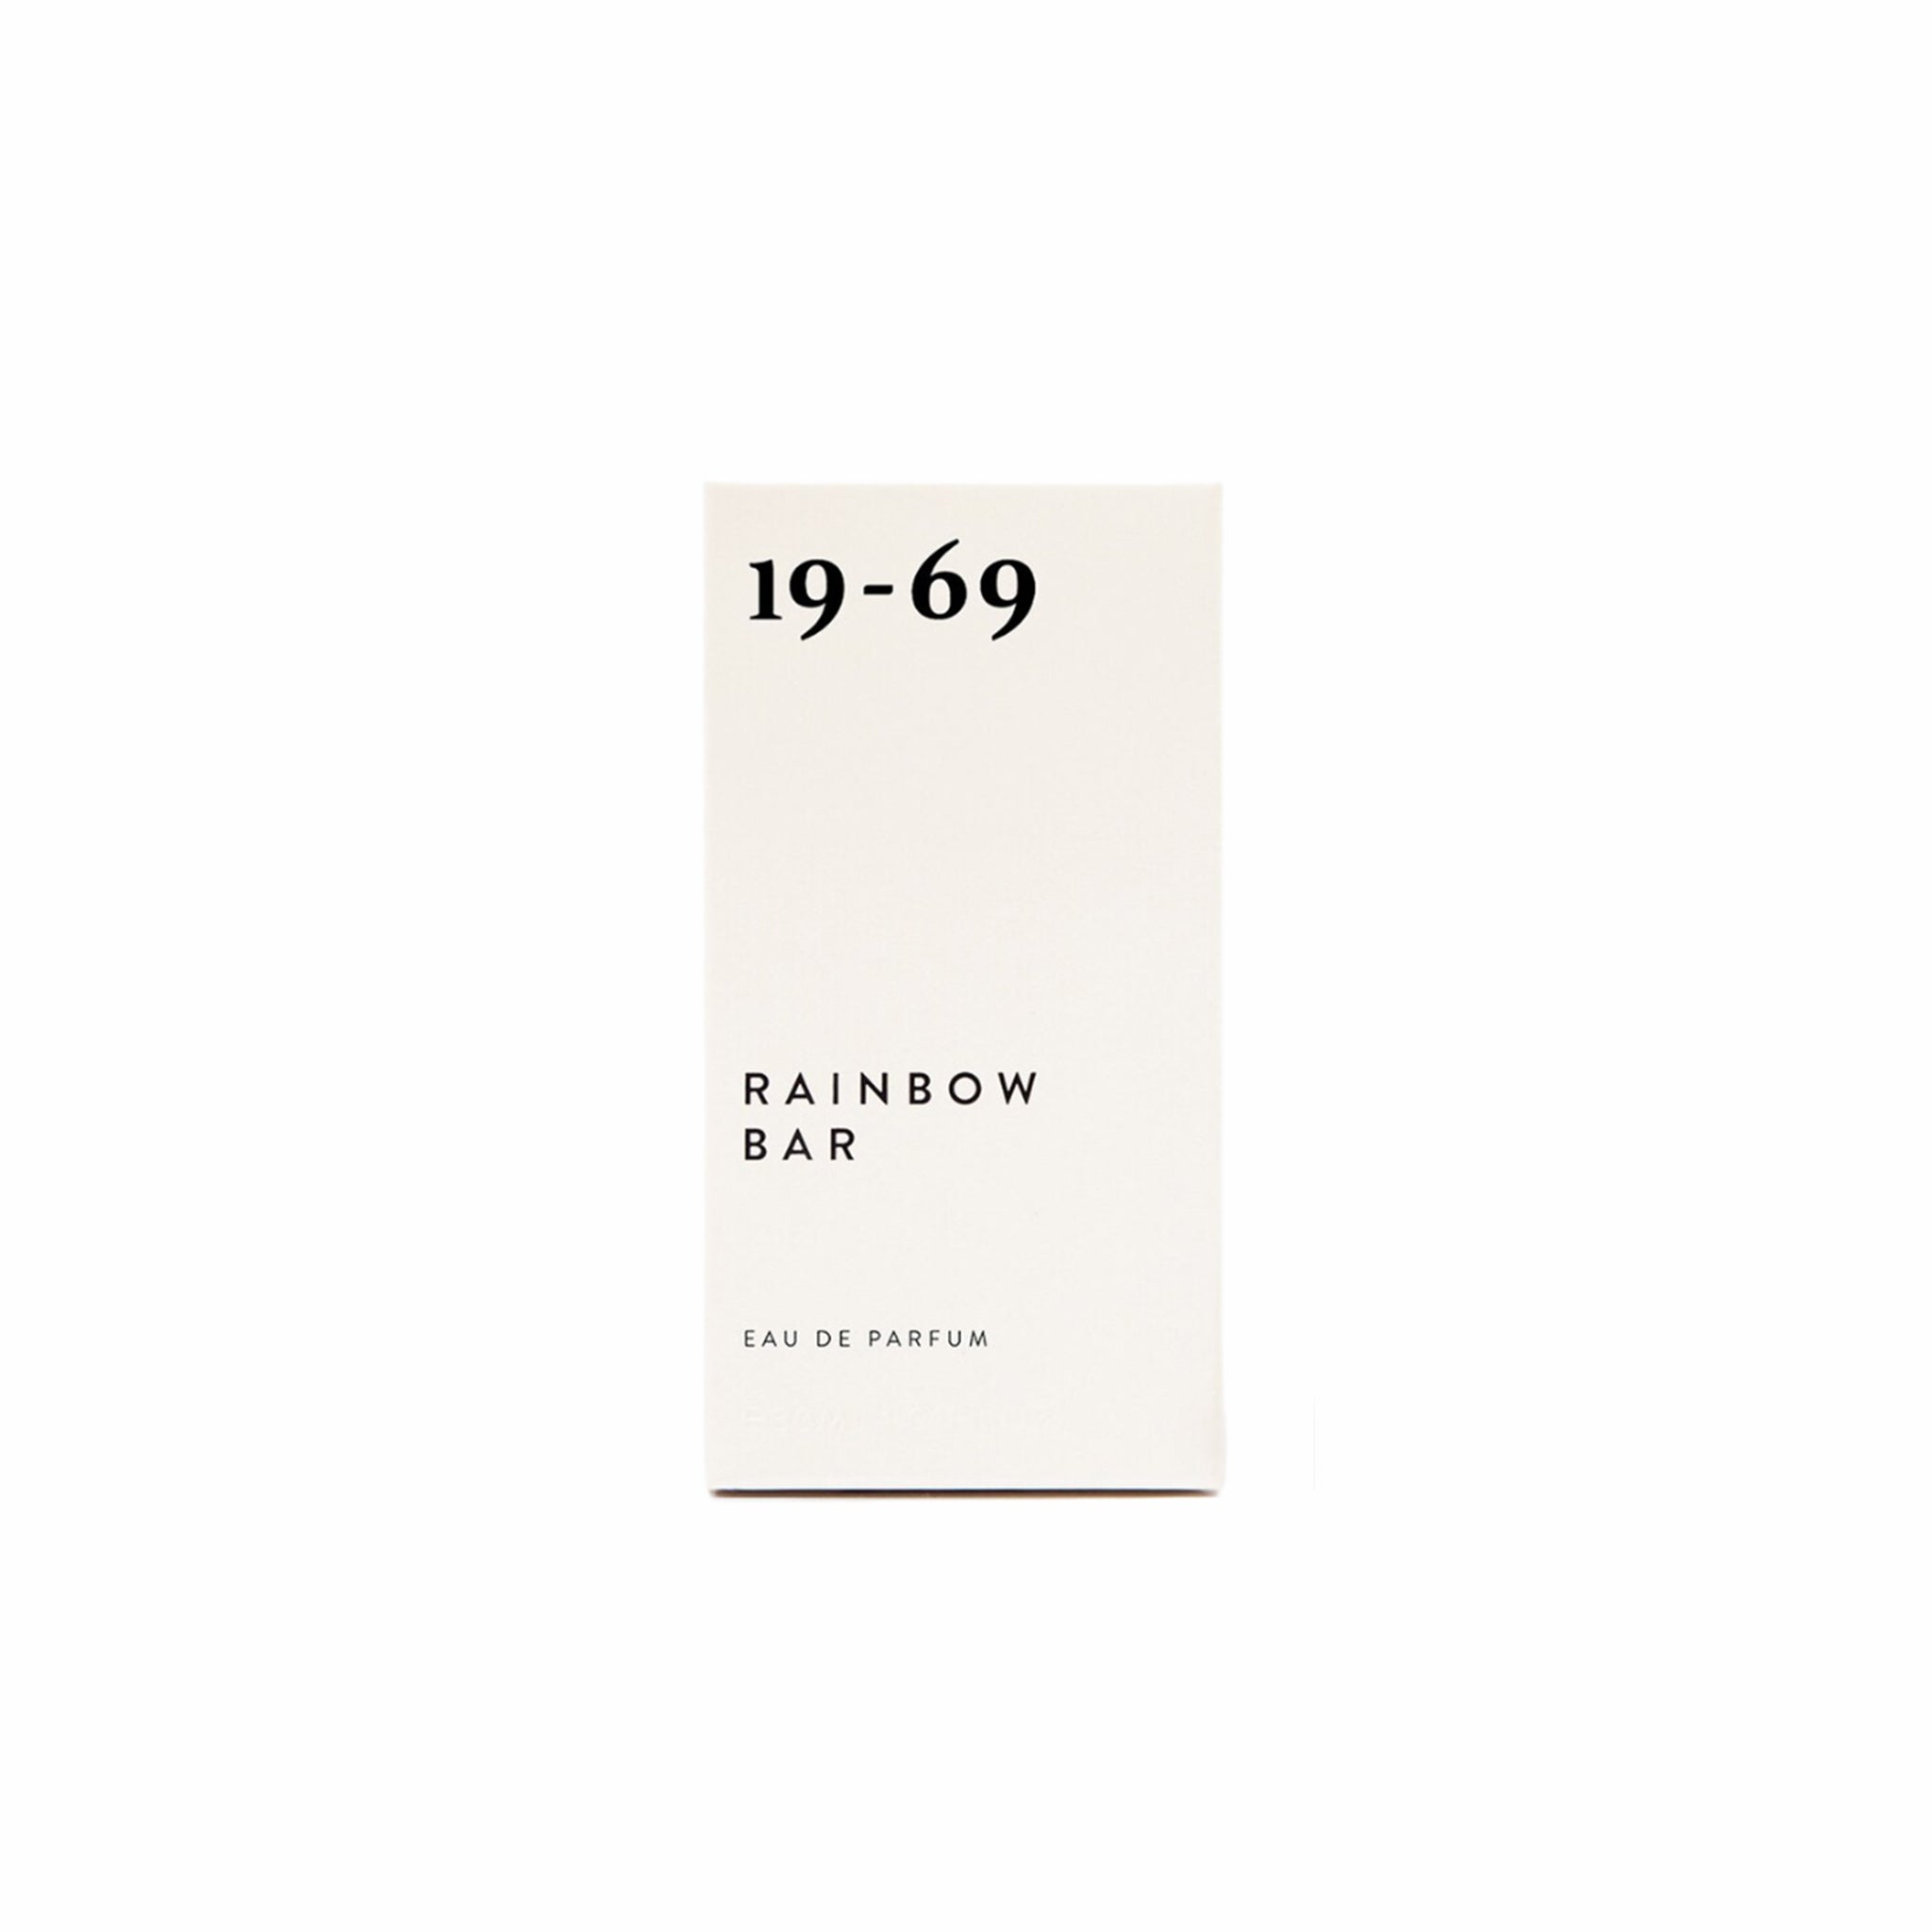 19-69 Rainbow Bar Eau de Parfum (30mL) - August Shop